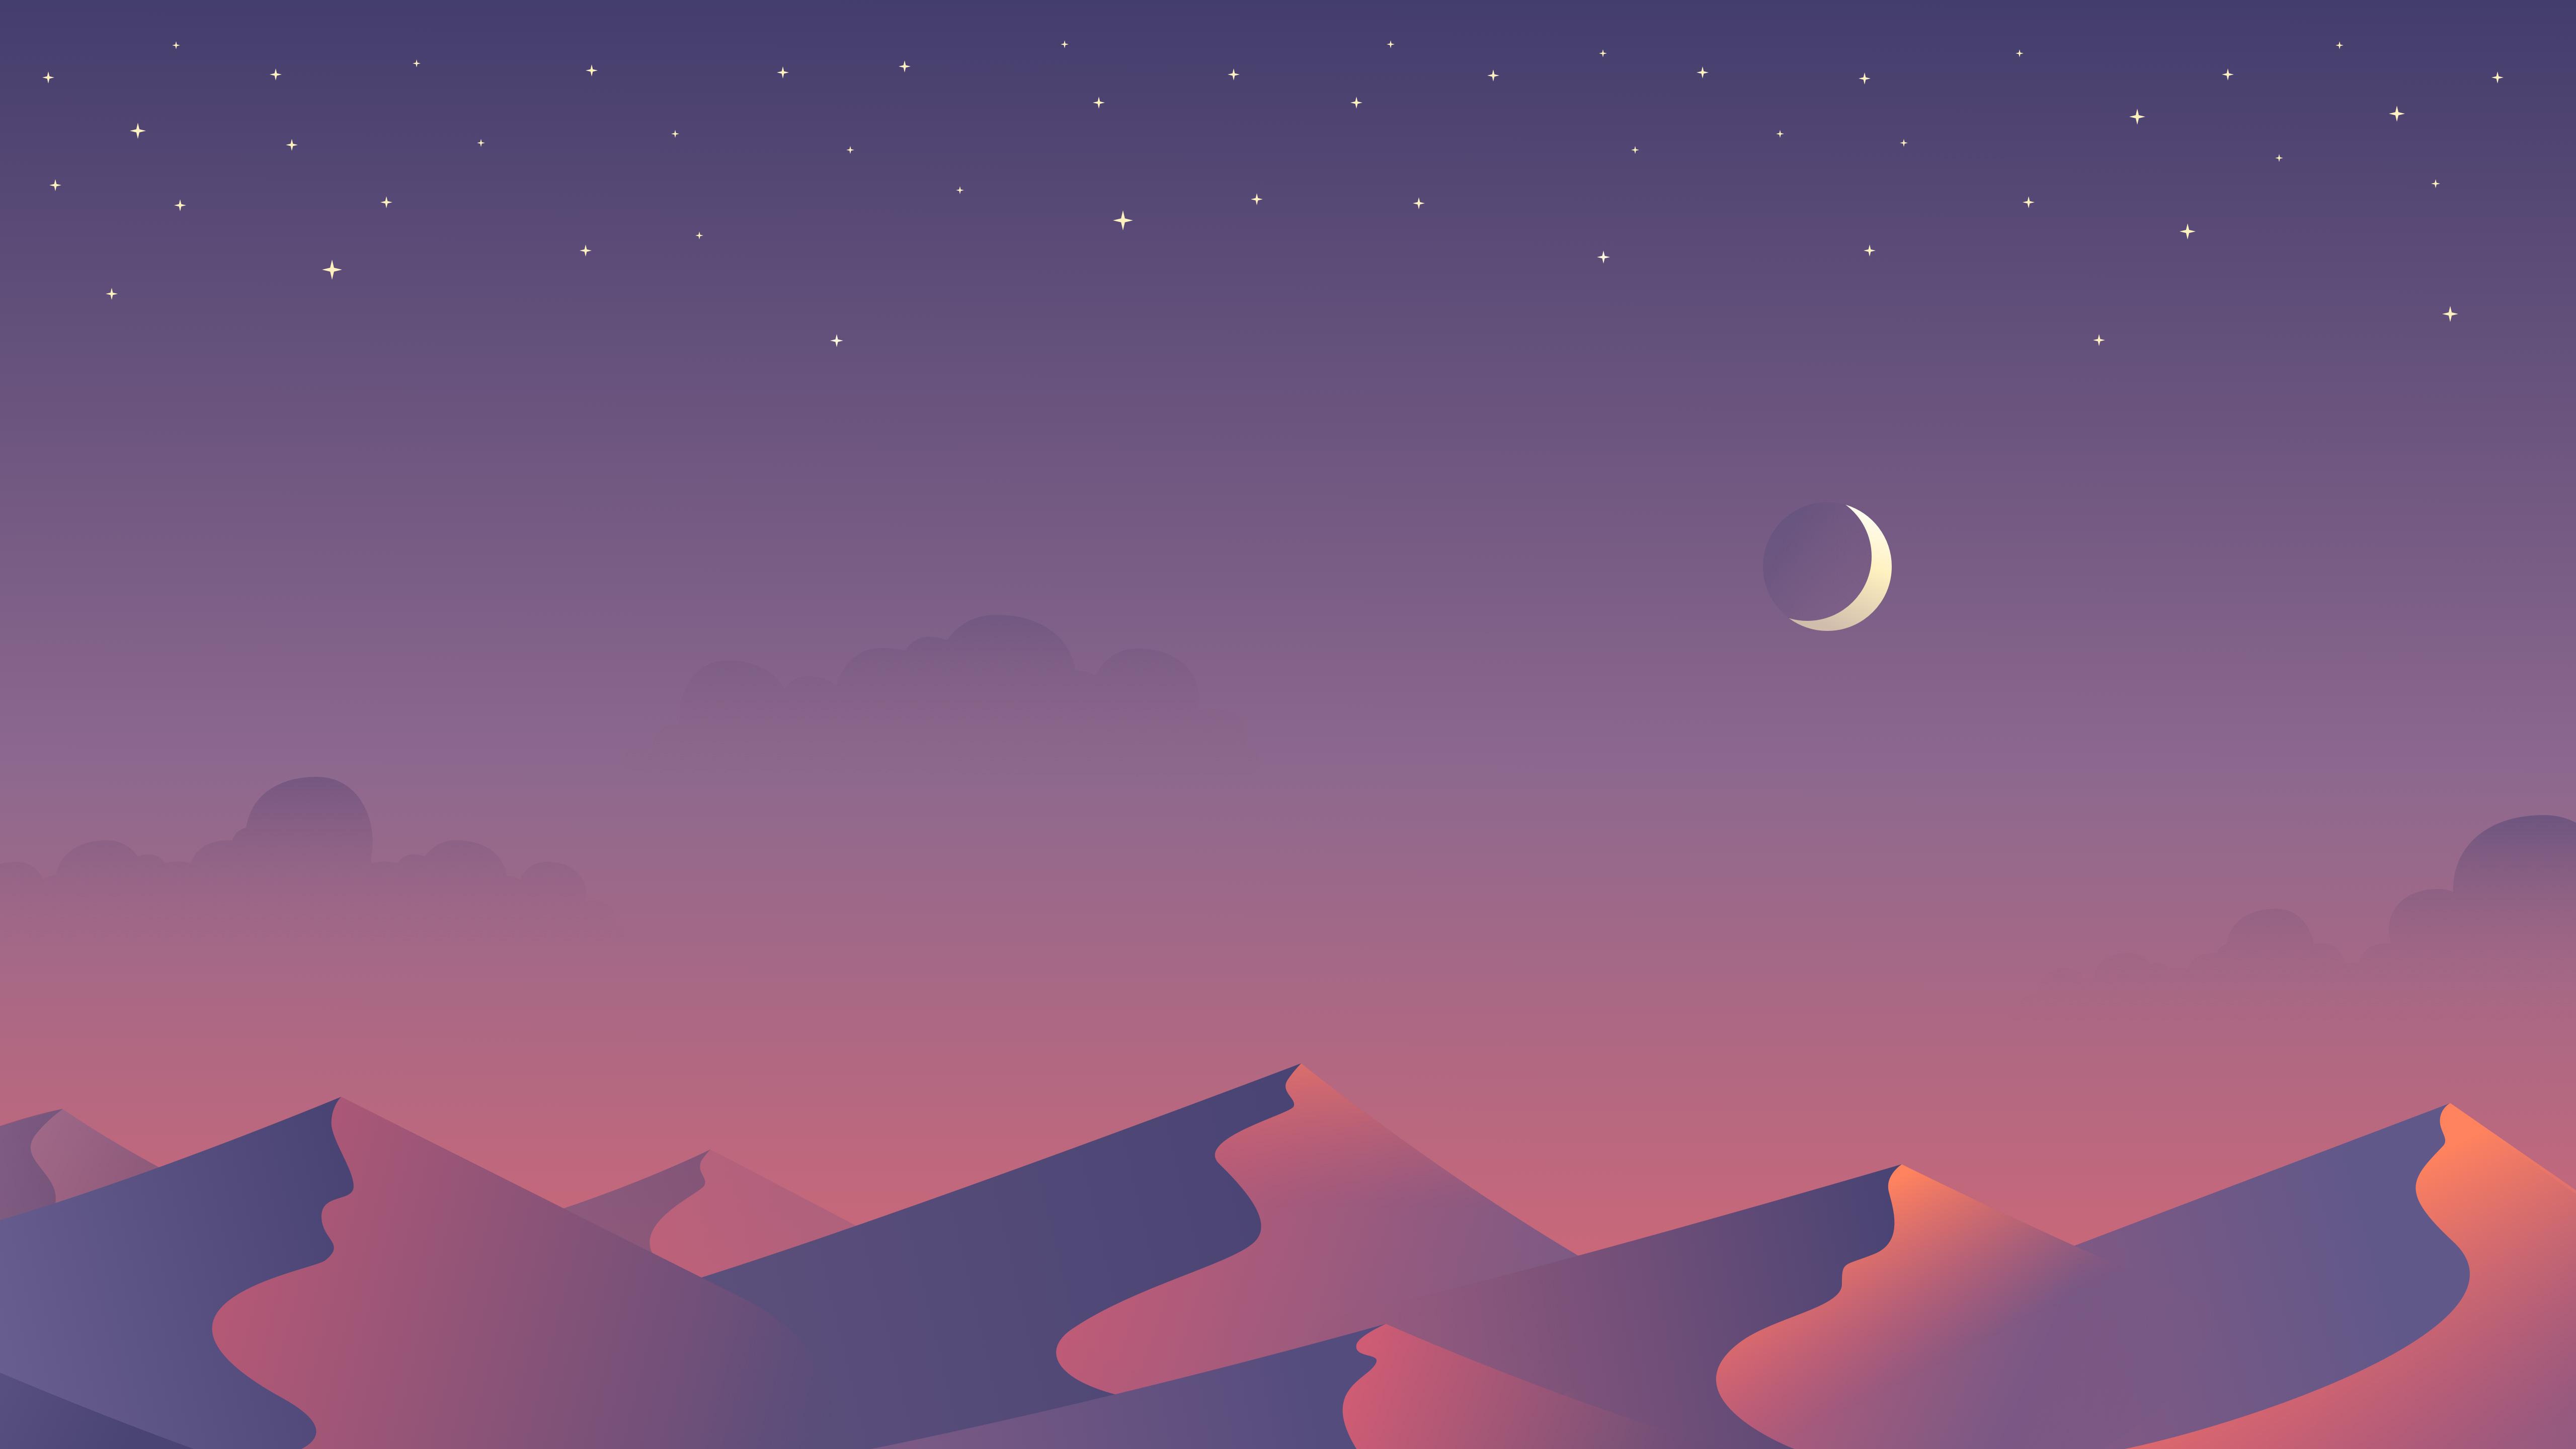 Desert Nights Moon 5k Minimalism, HD Artist, 4k Wallpaper, Image